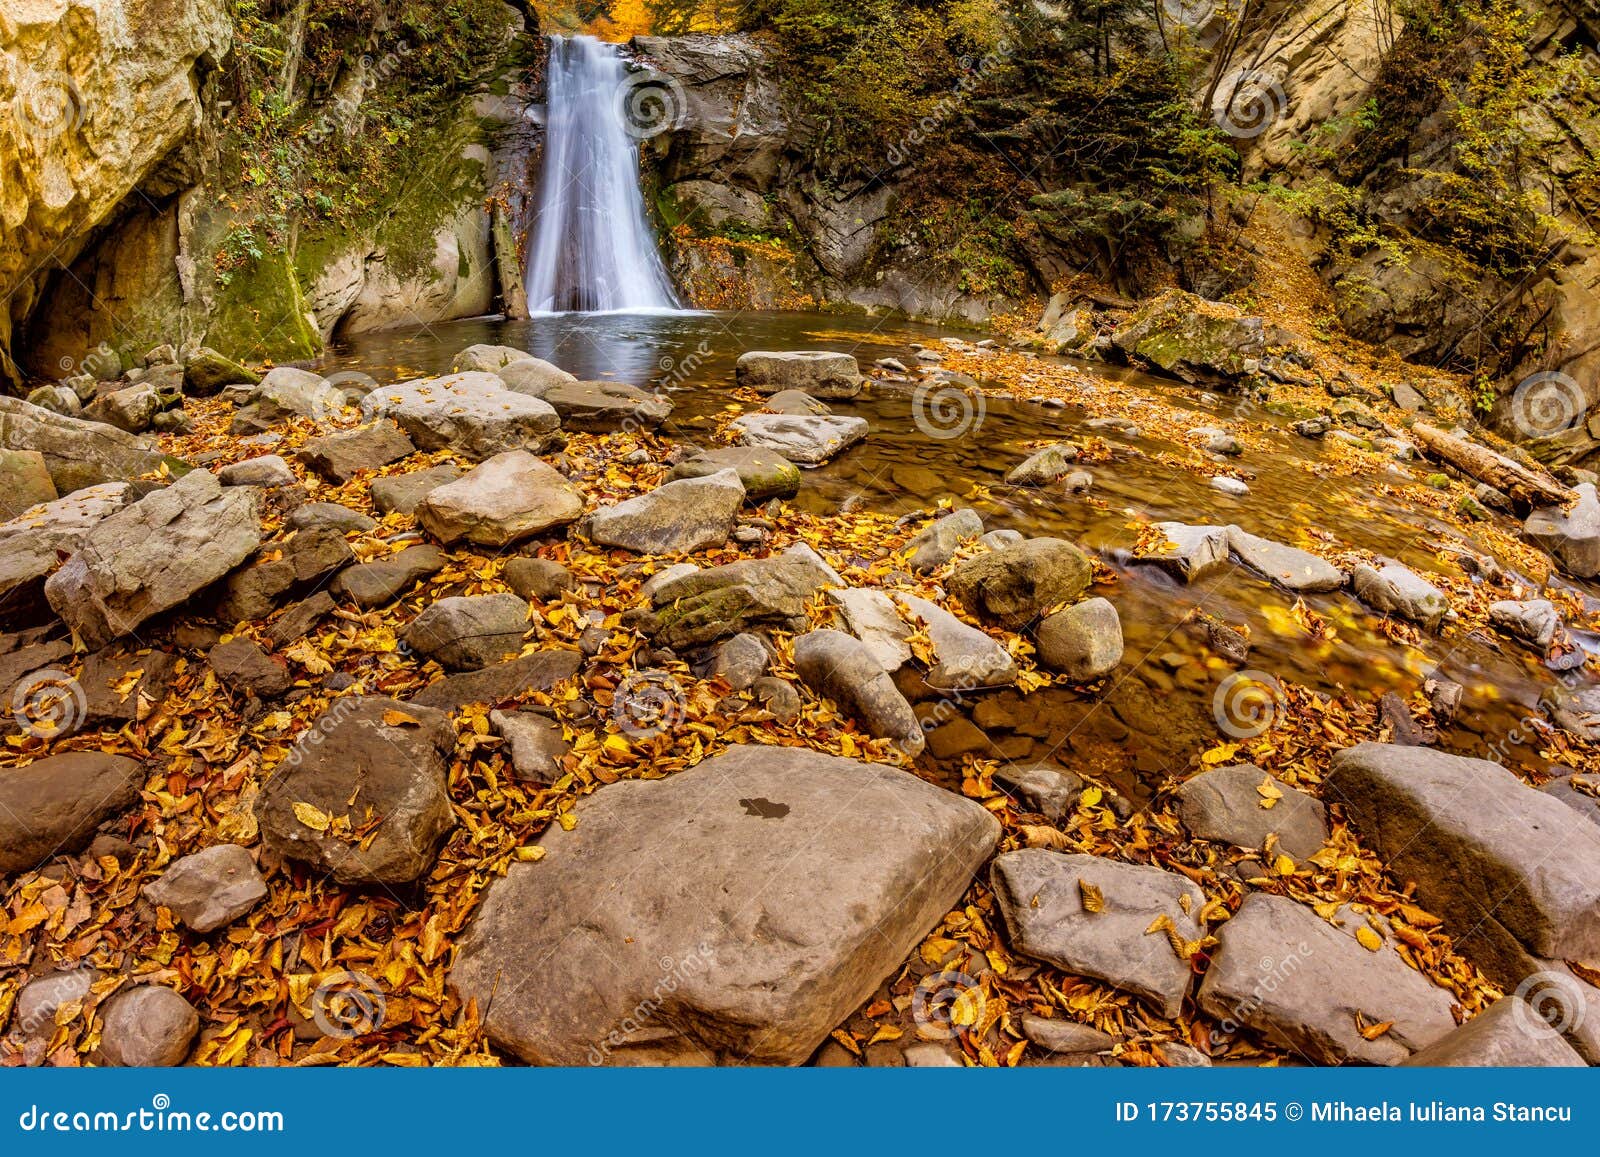 long exposure view of the beautiful pruncea caÃÅ¸oca waterfall with fallen leaves in an autumn landscape